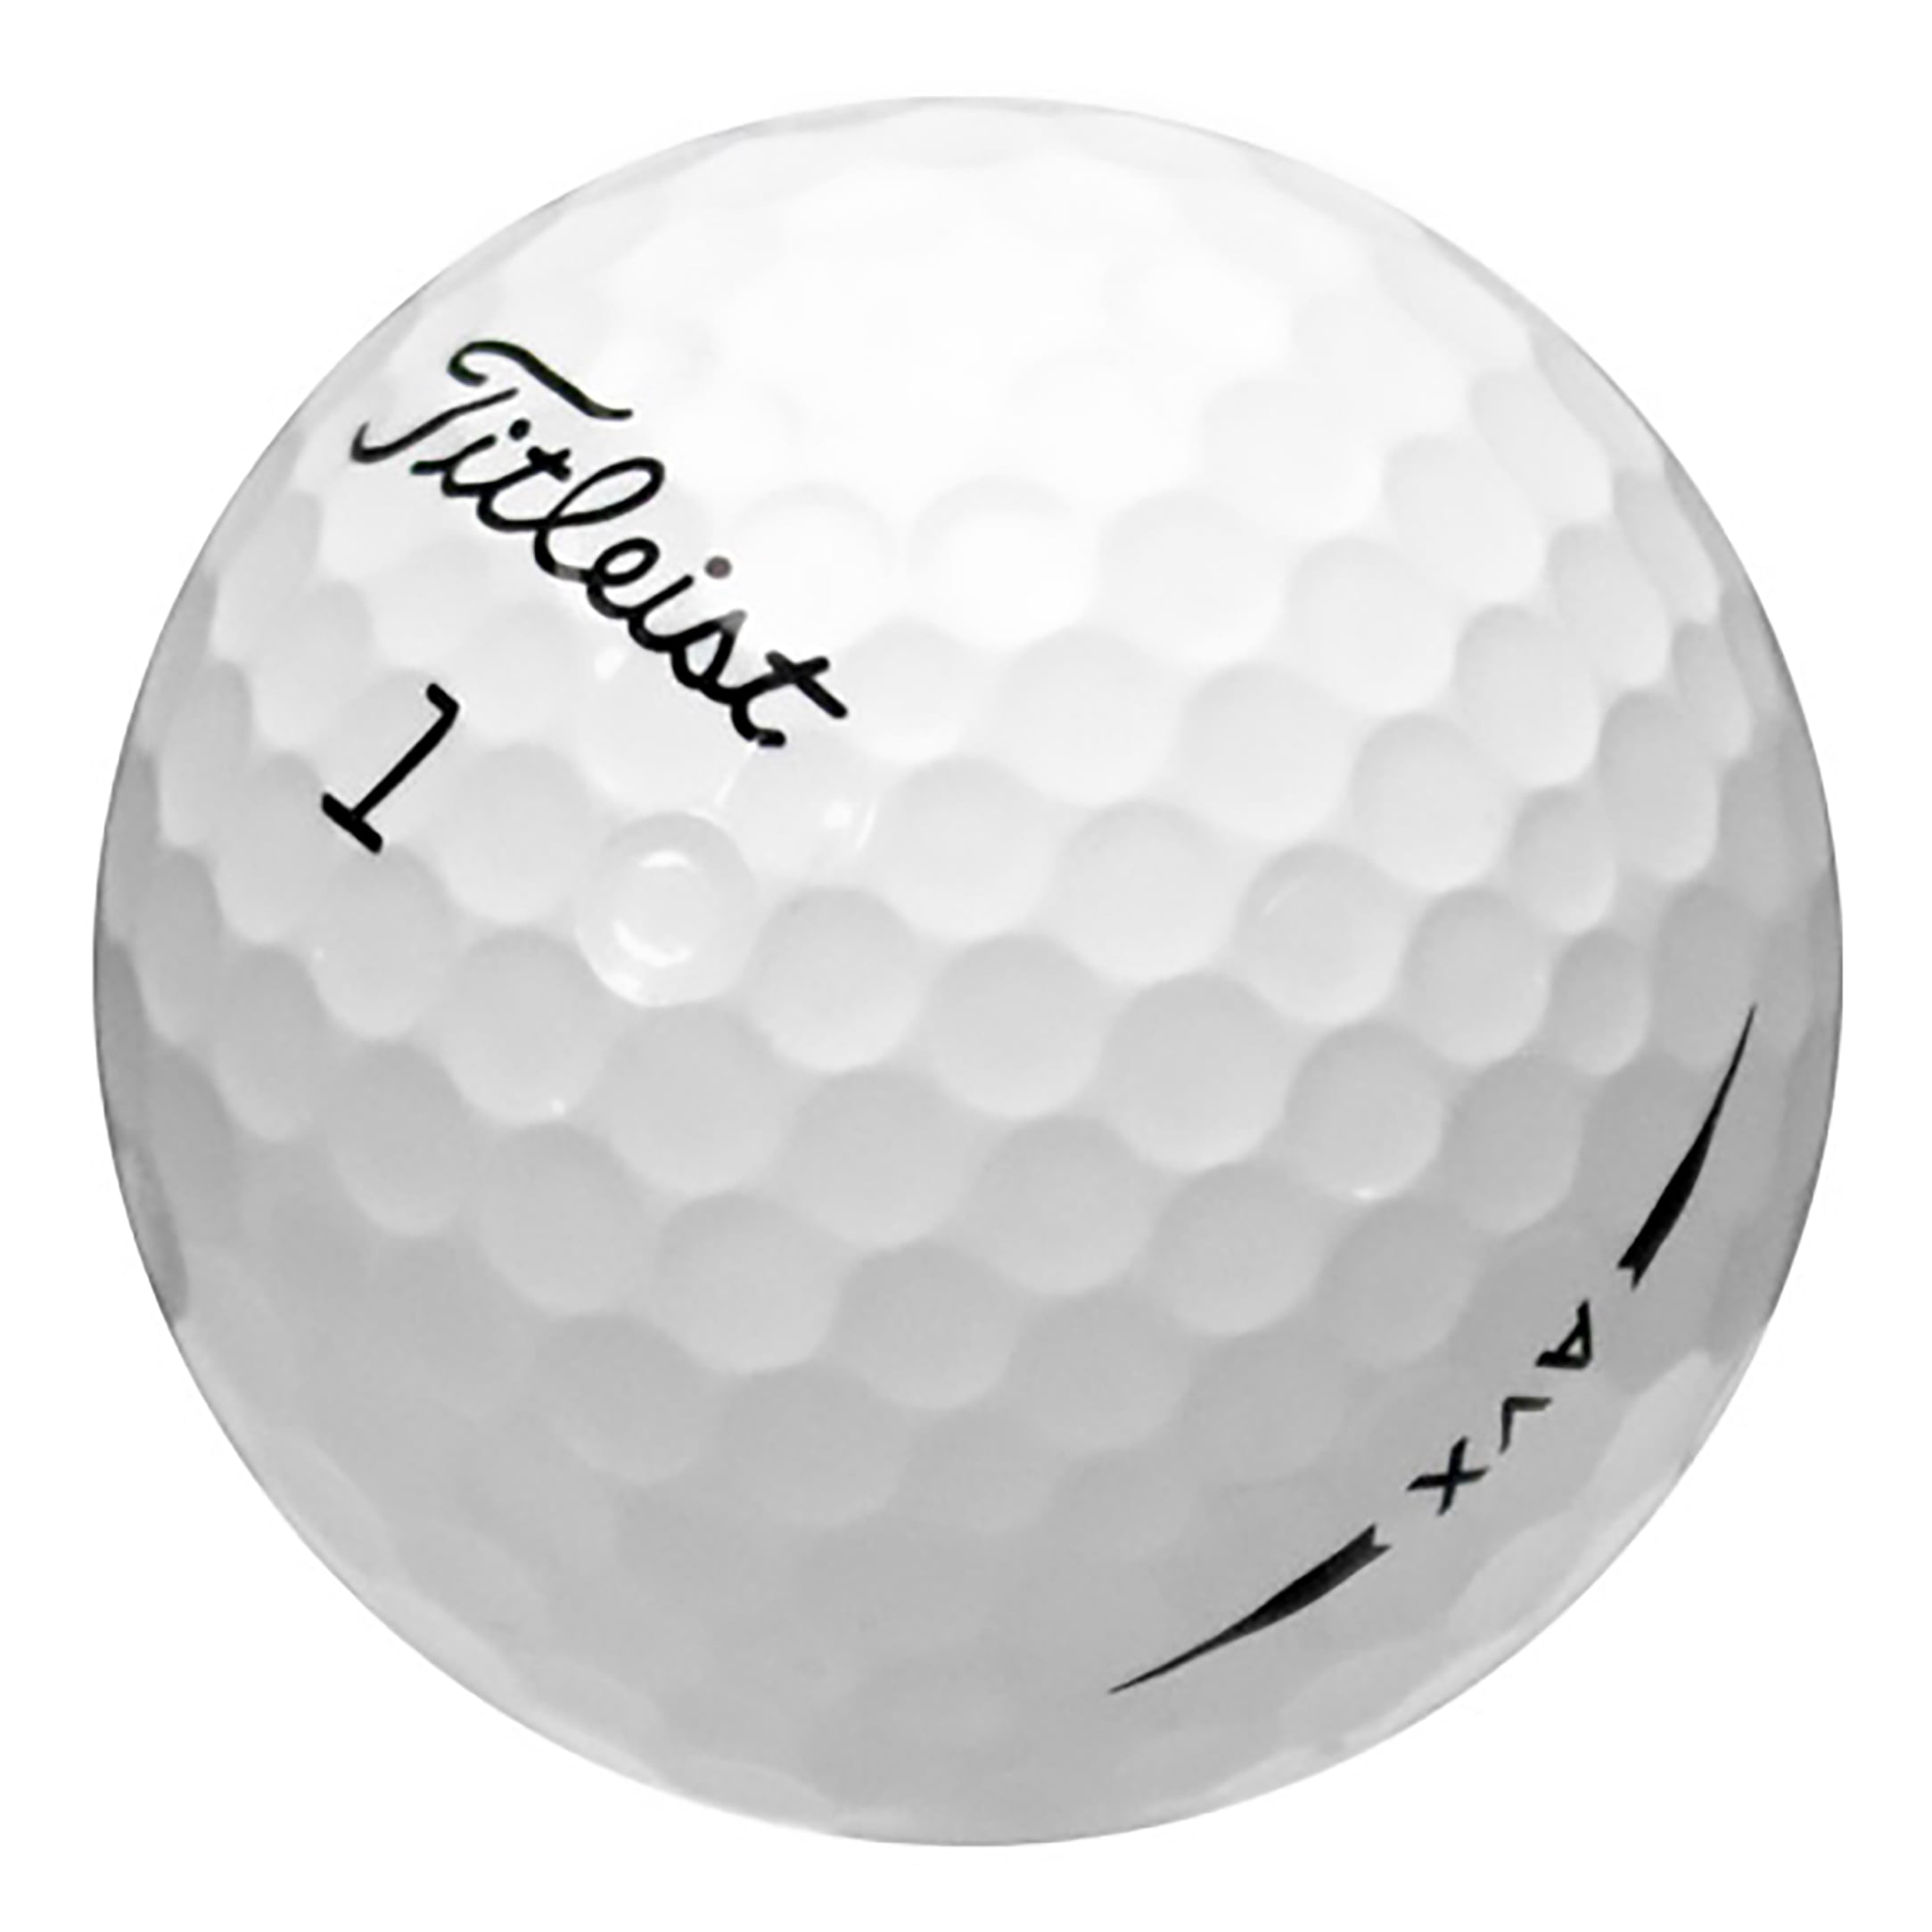 Izzo Golf Ball Rocks Glass-Cube Set (4-Pack)